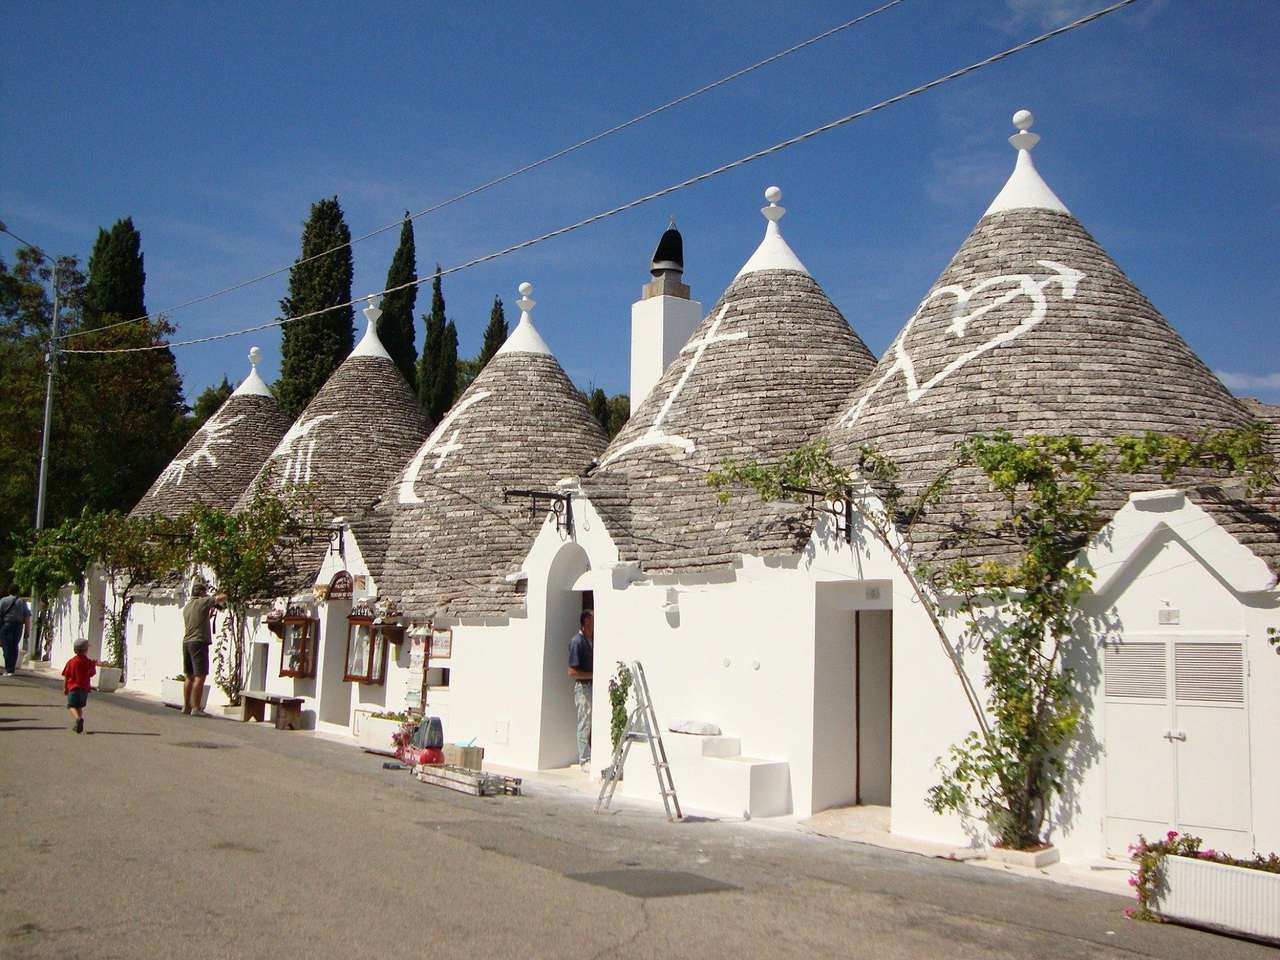 Alberobello Tradiční trulli domy v Apulii skládačky online